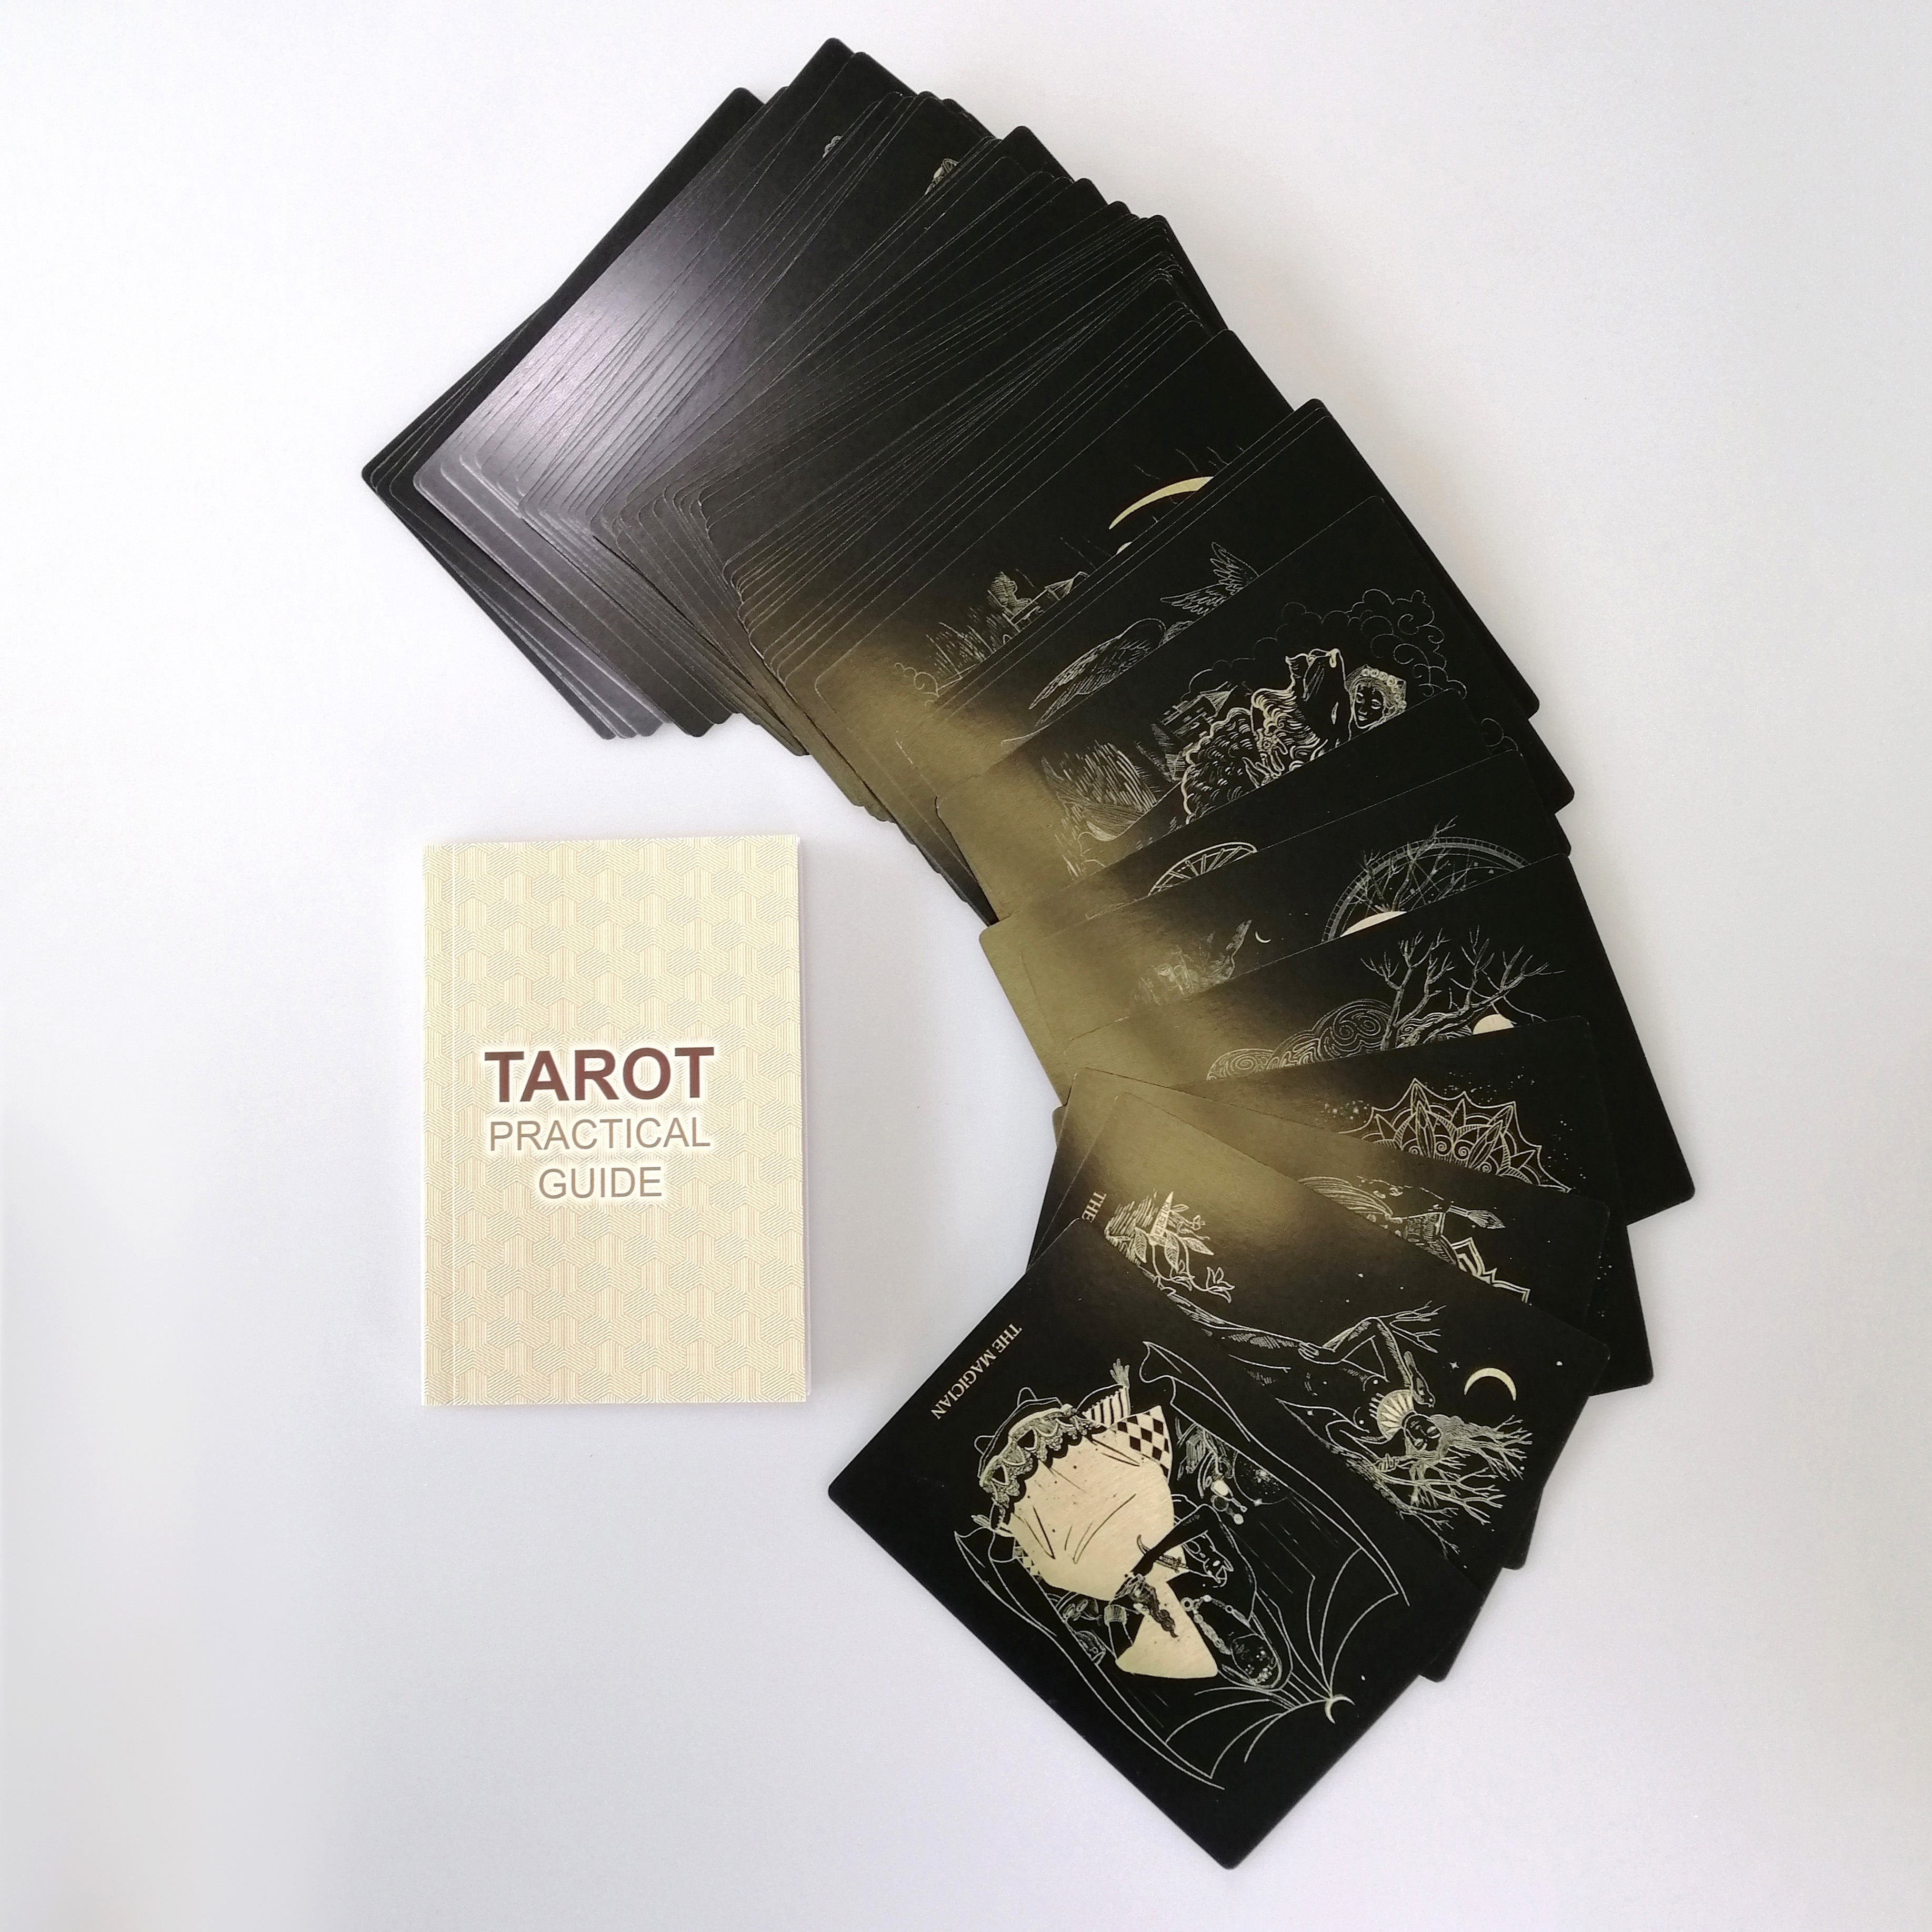 Astral Gate Tarot Card Deck